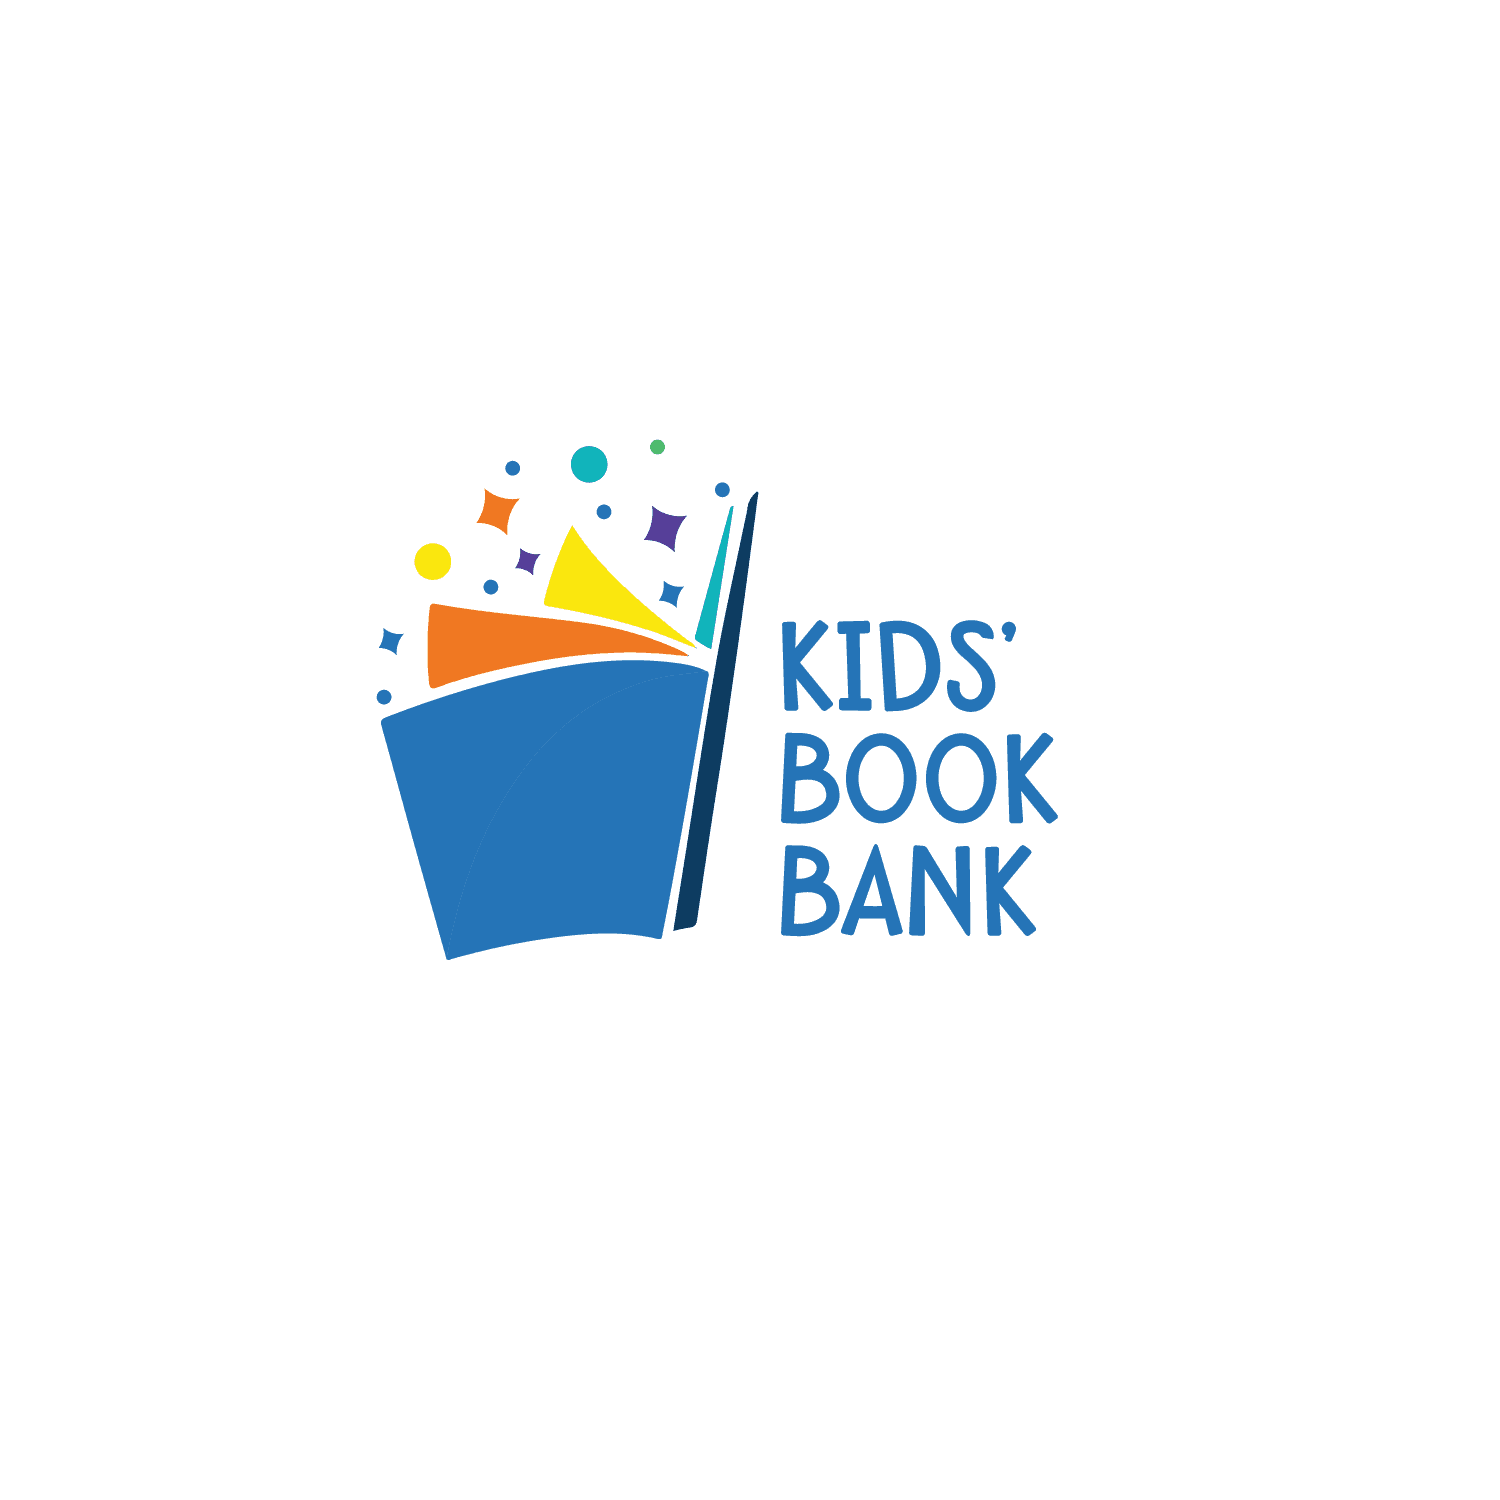 Cleveland Kids' Book Bank